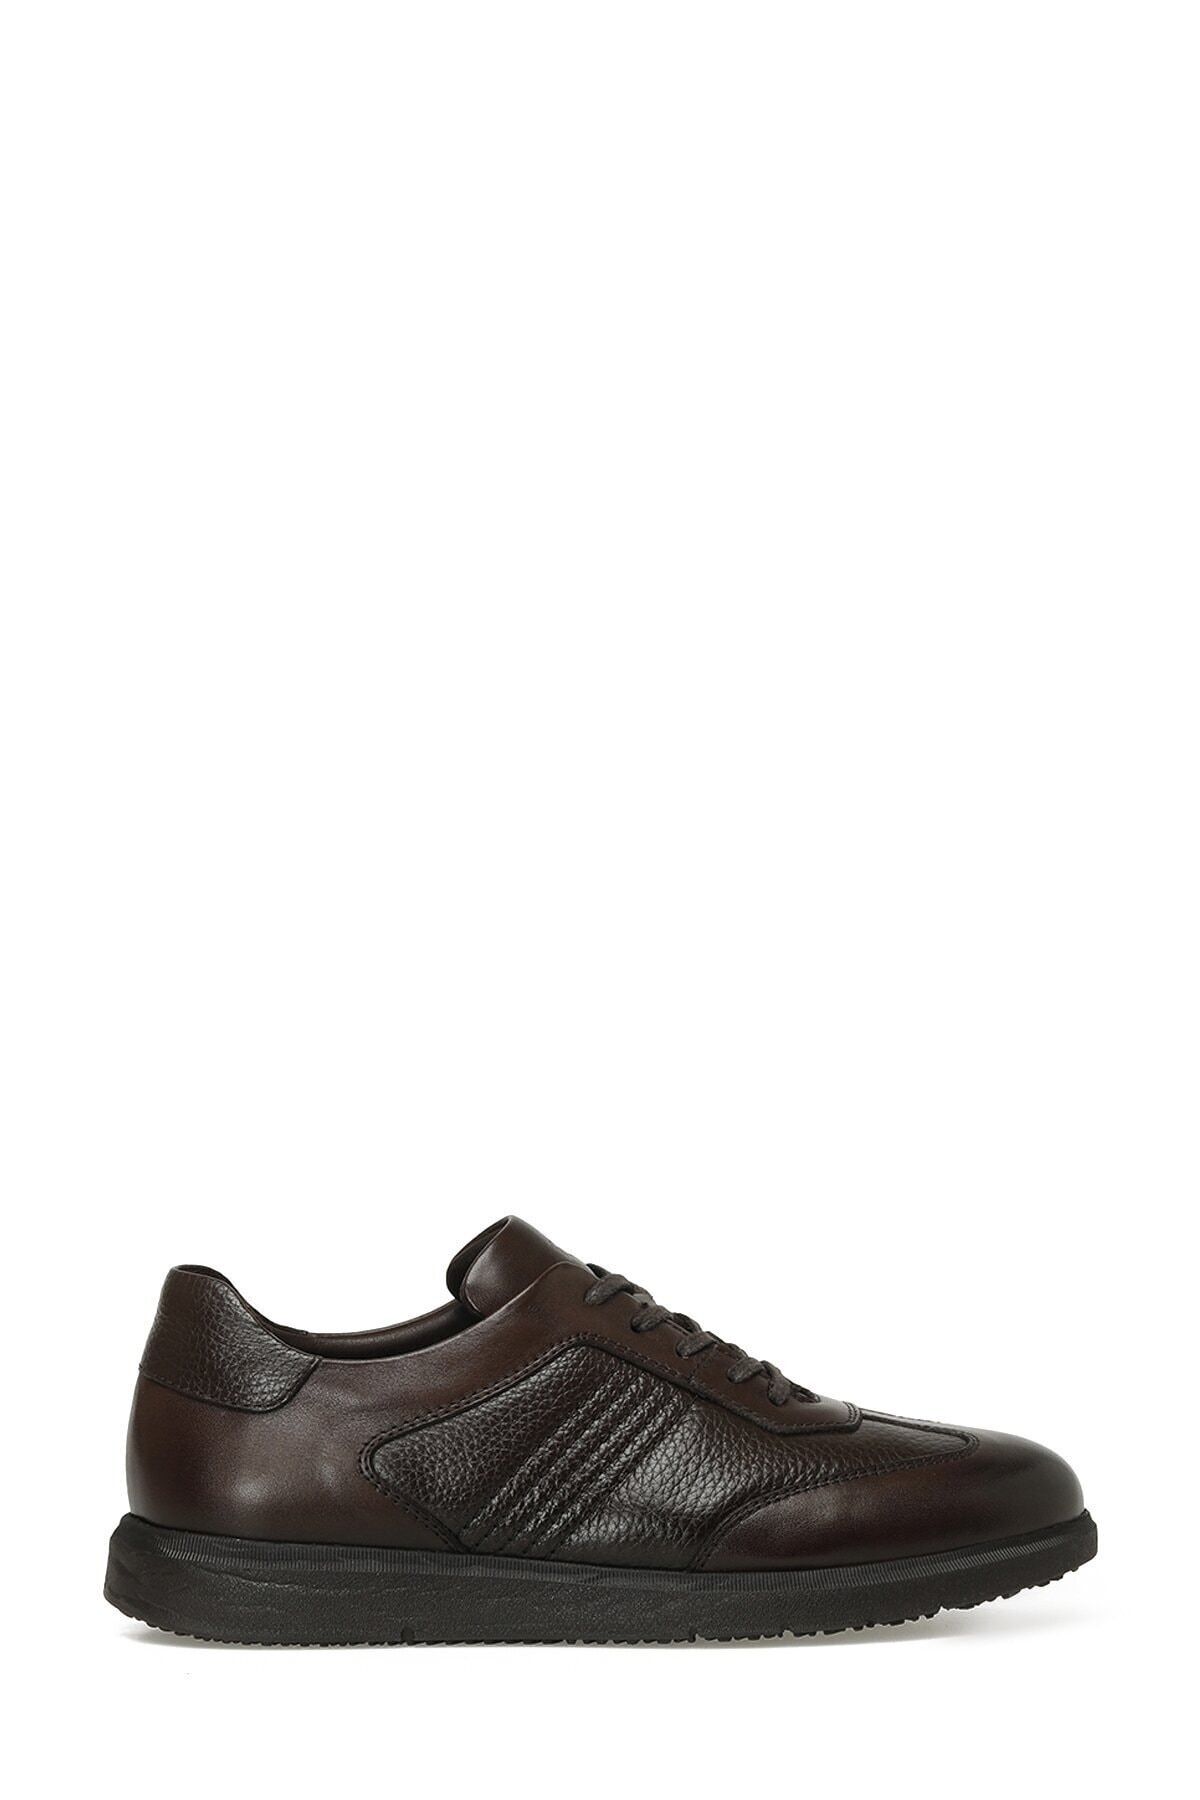 İnci LIVA 3PR Brown Men's Casual Shoes